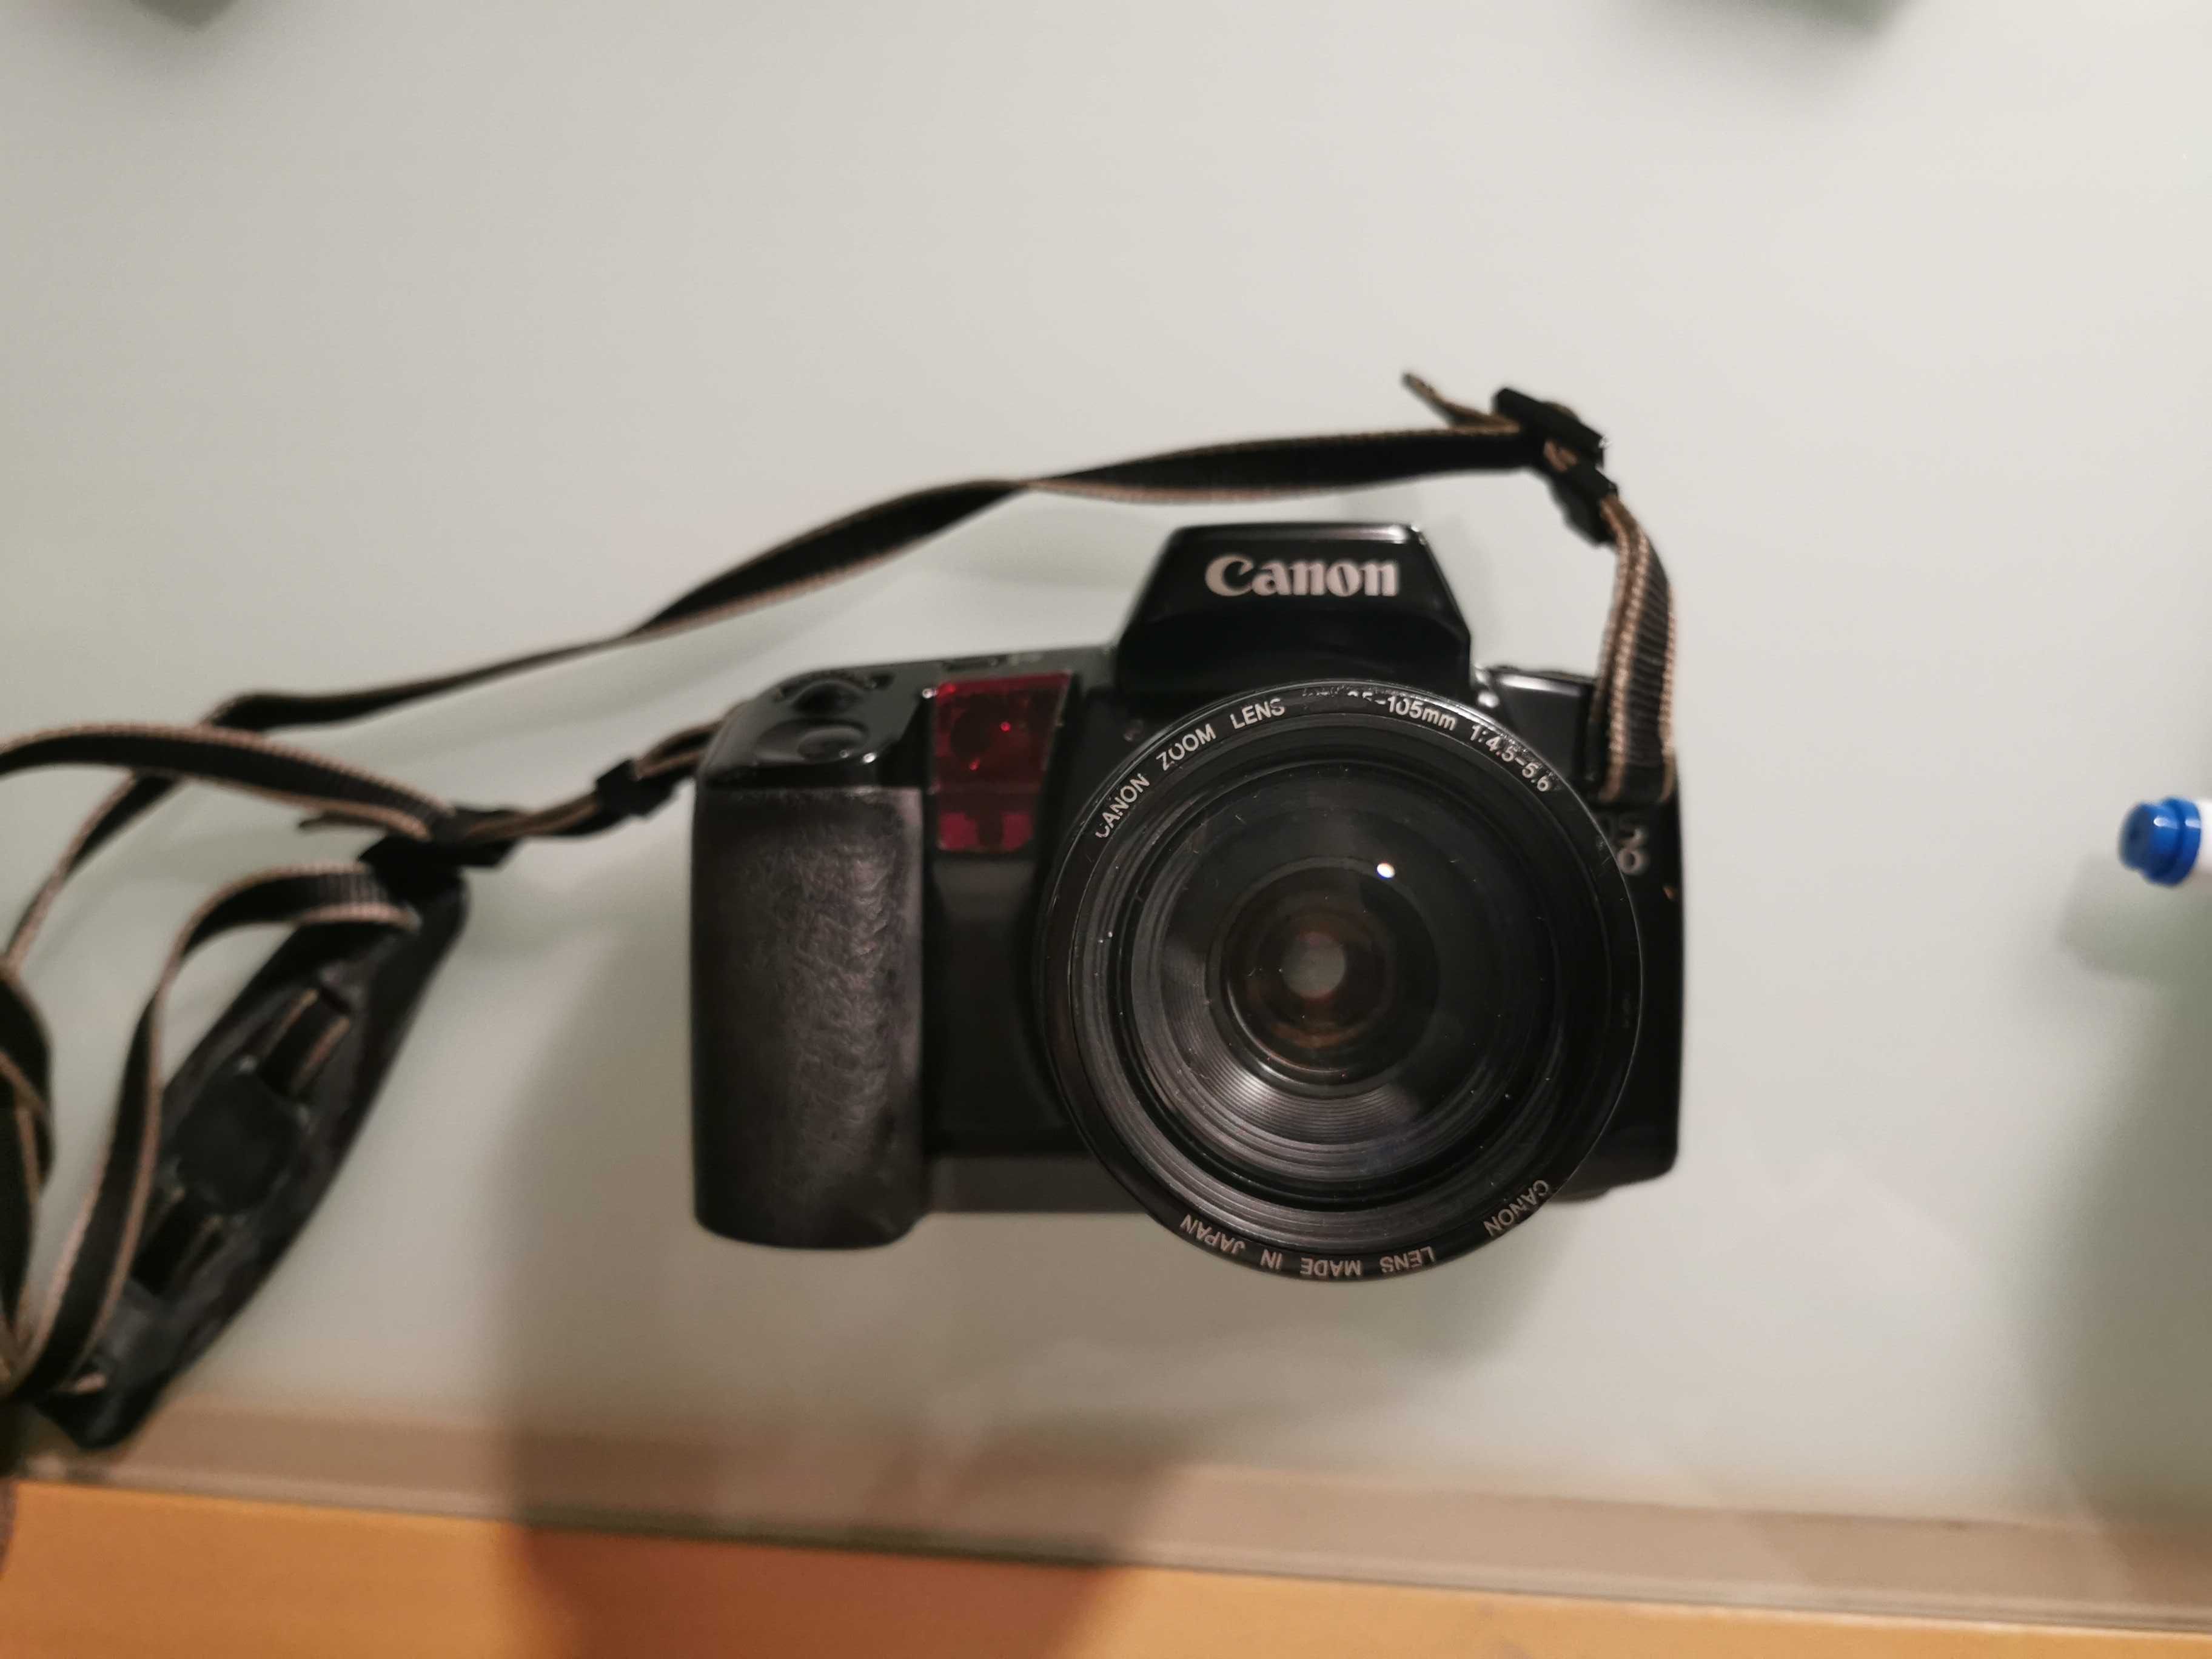 Canon EOS 10 com lente Canon 35-105mm com bolsa de transporte Canon